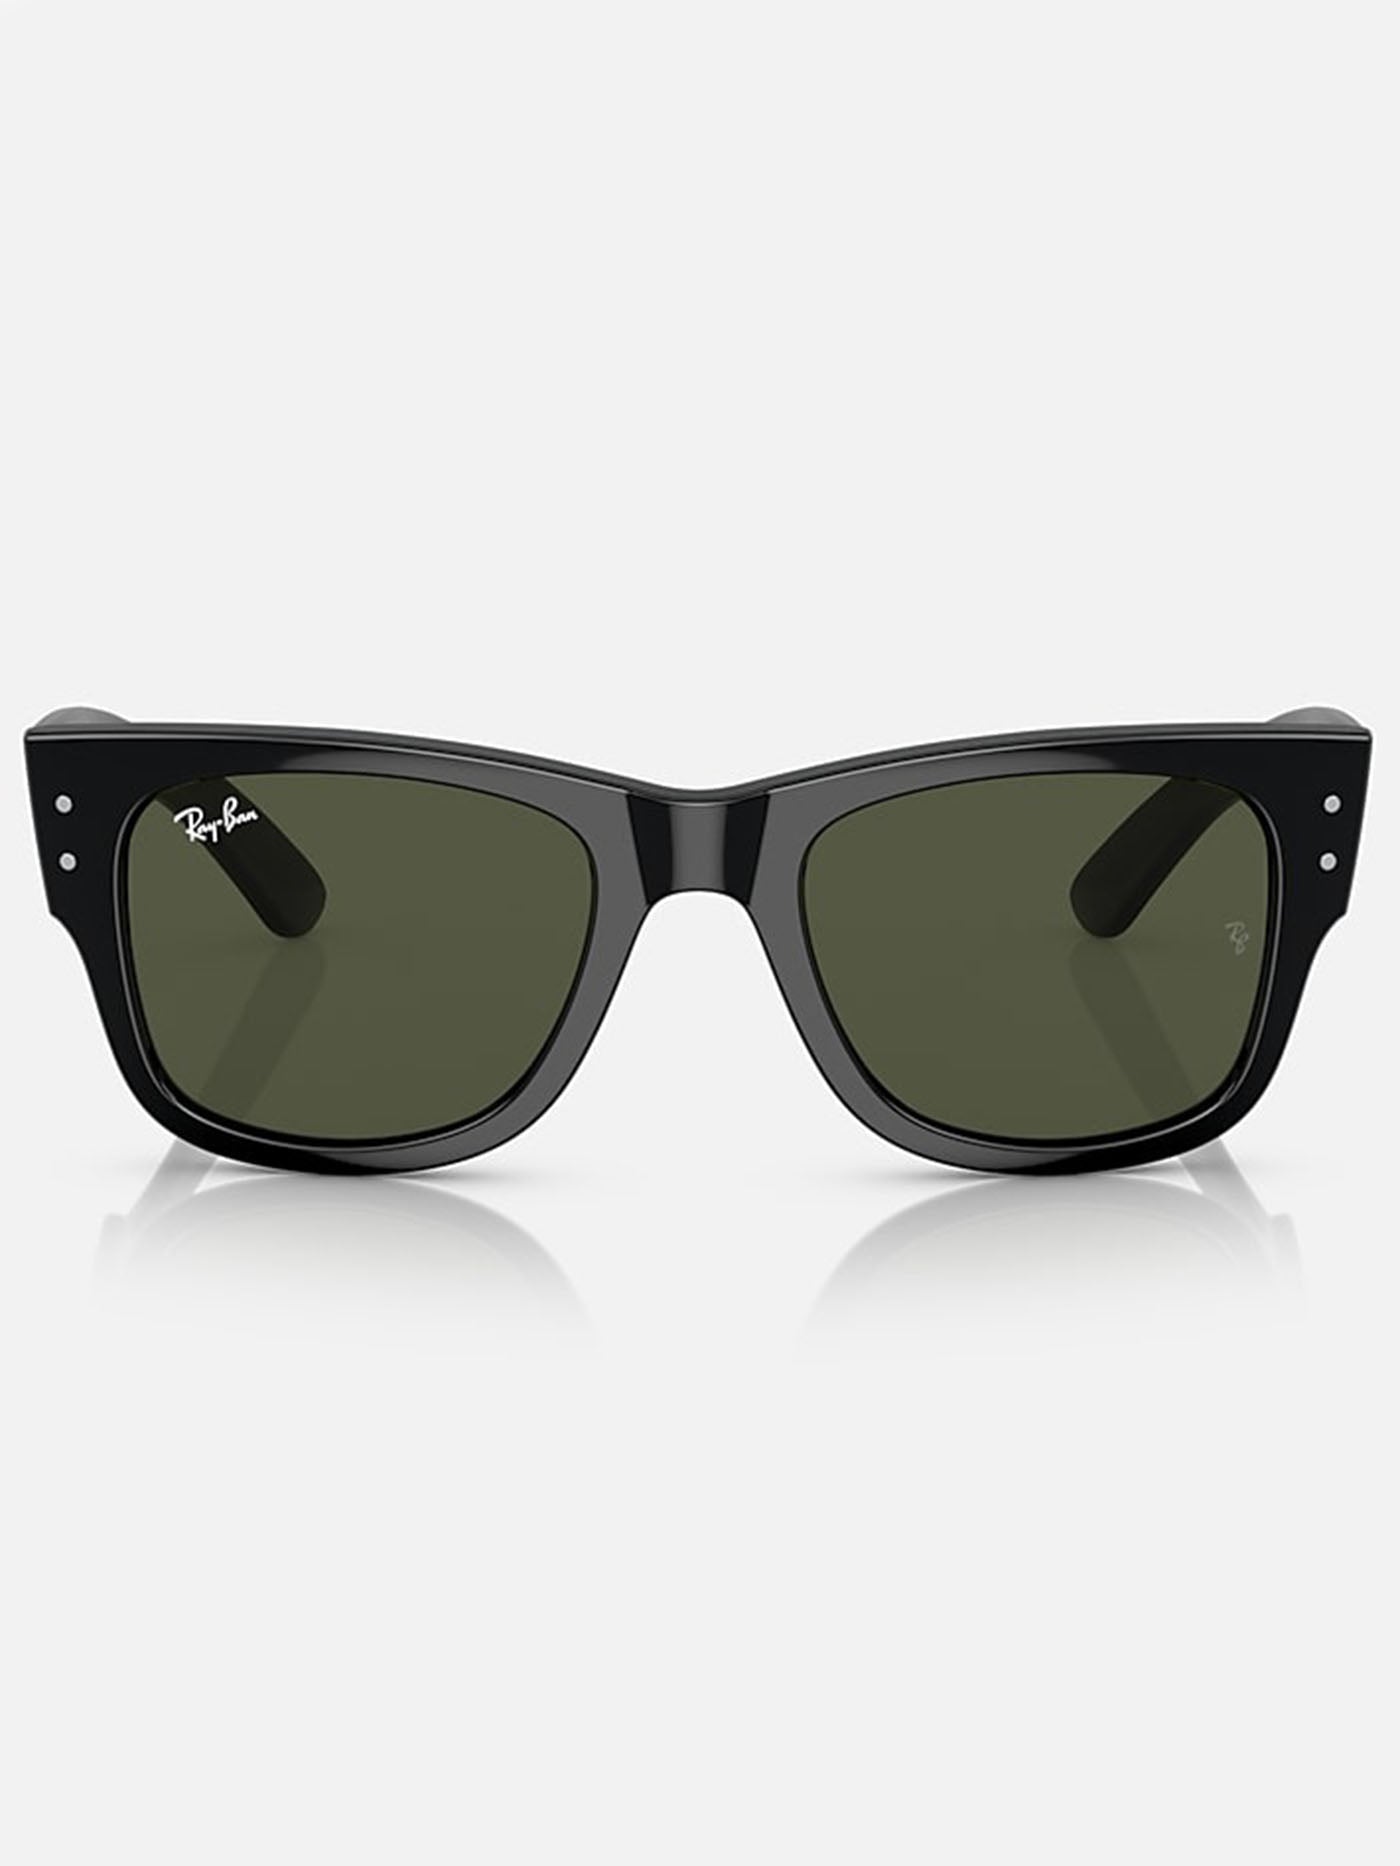 Ray Ban 2024 Mega Wayfarer Black/Green Classic Sunglasses